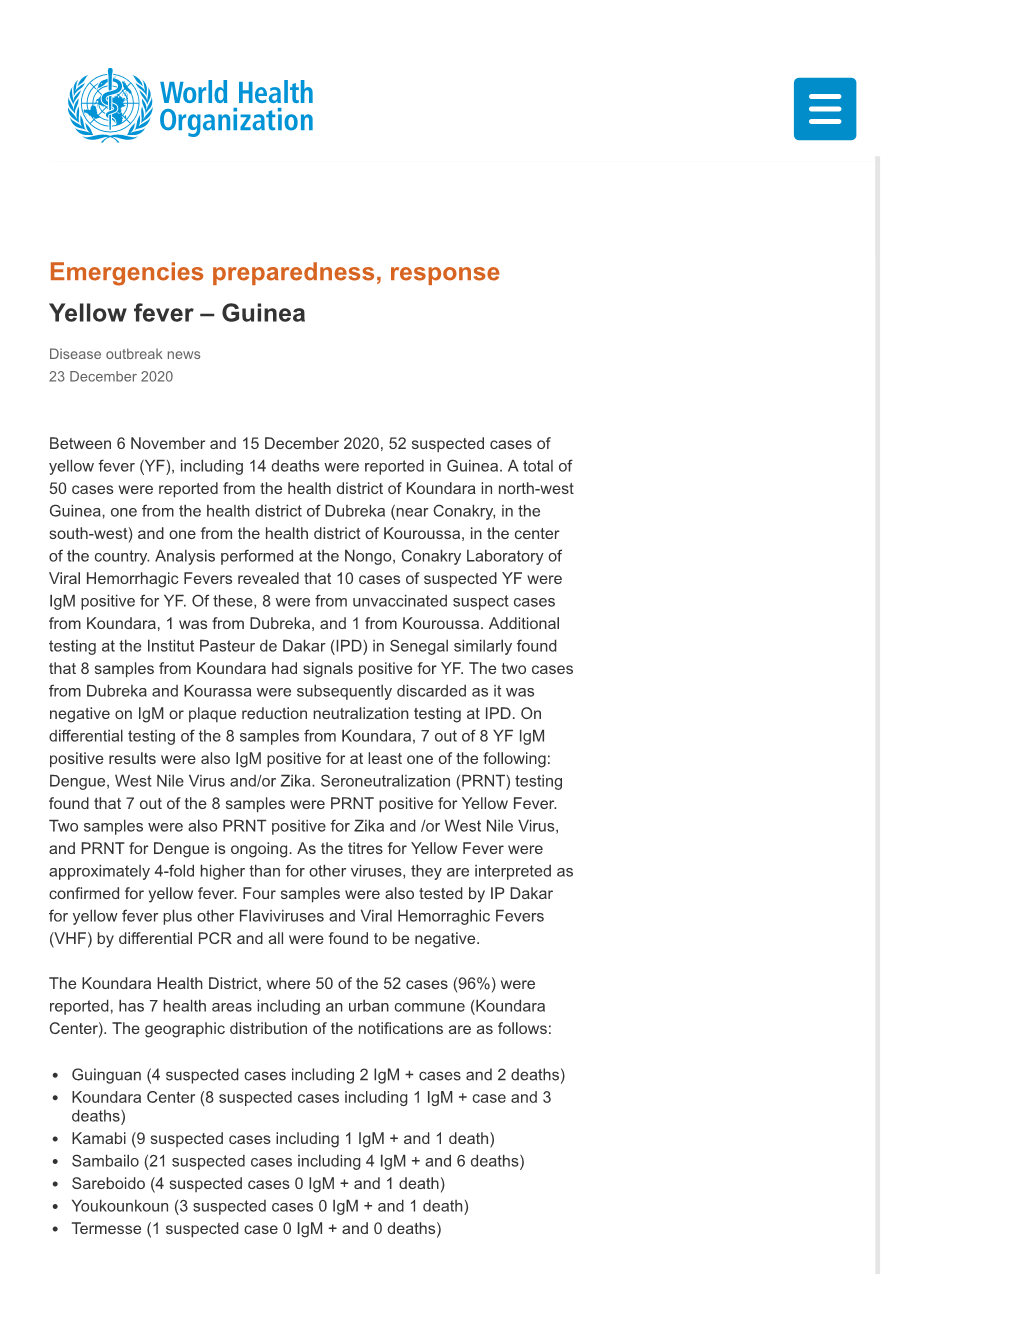 Emergencies Preparedness, Response Yellow Fever – Guinea